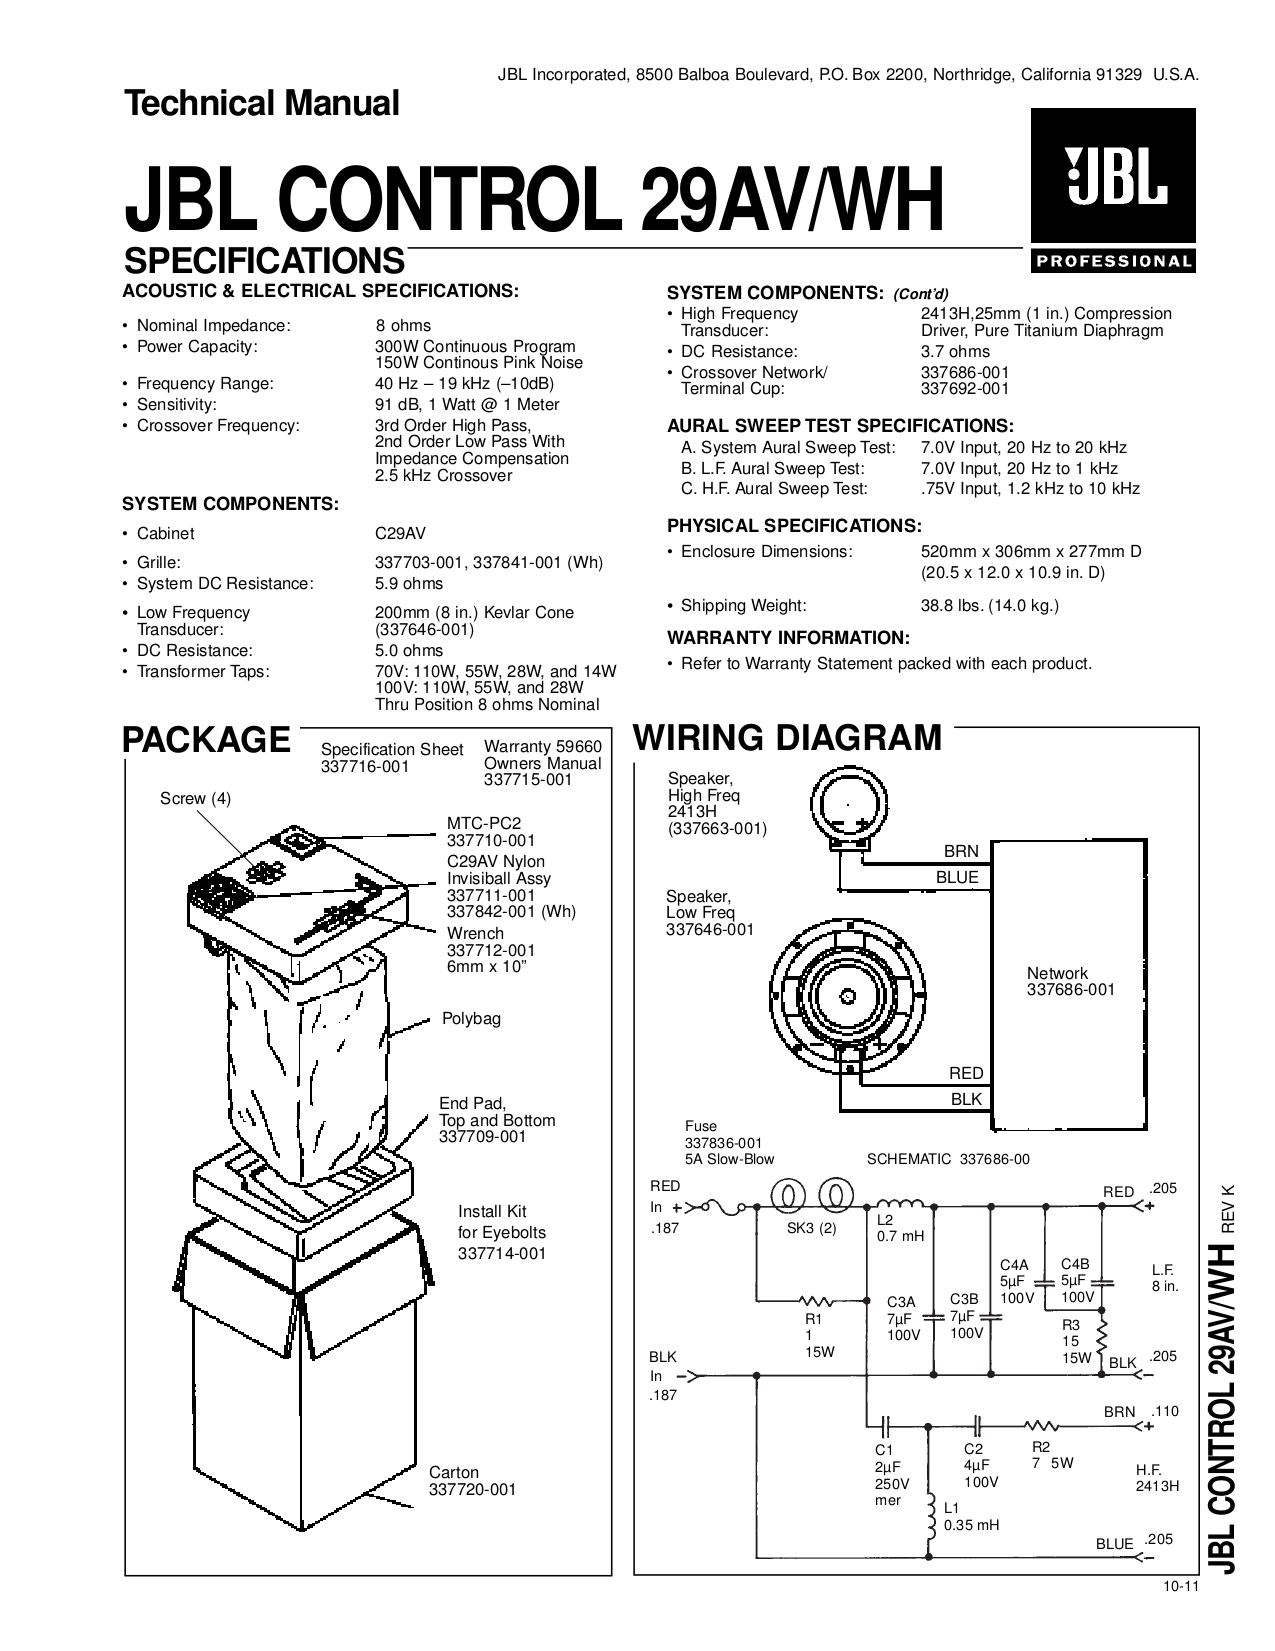 grbl controller manual pdf